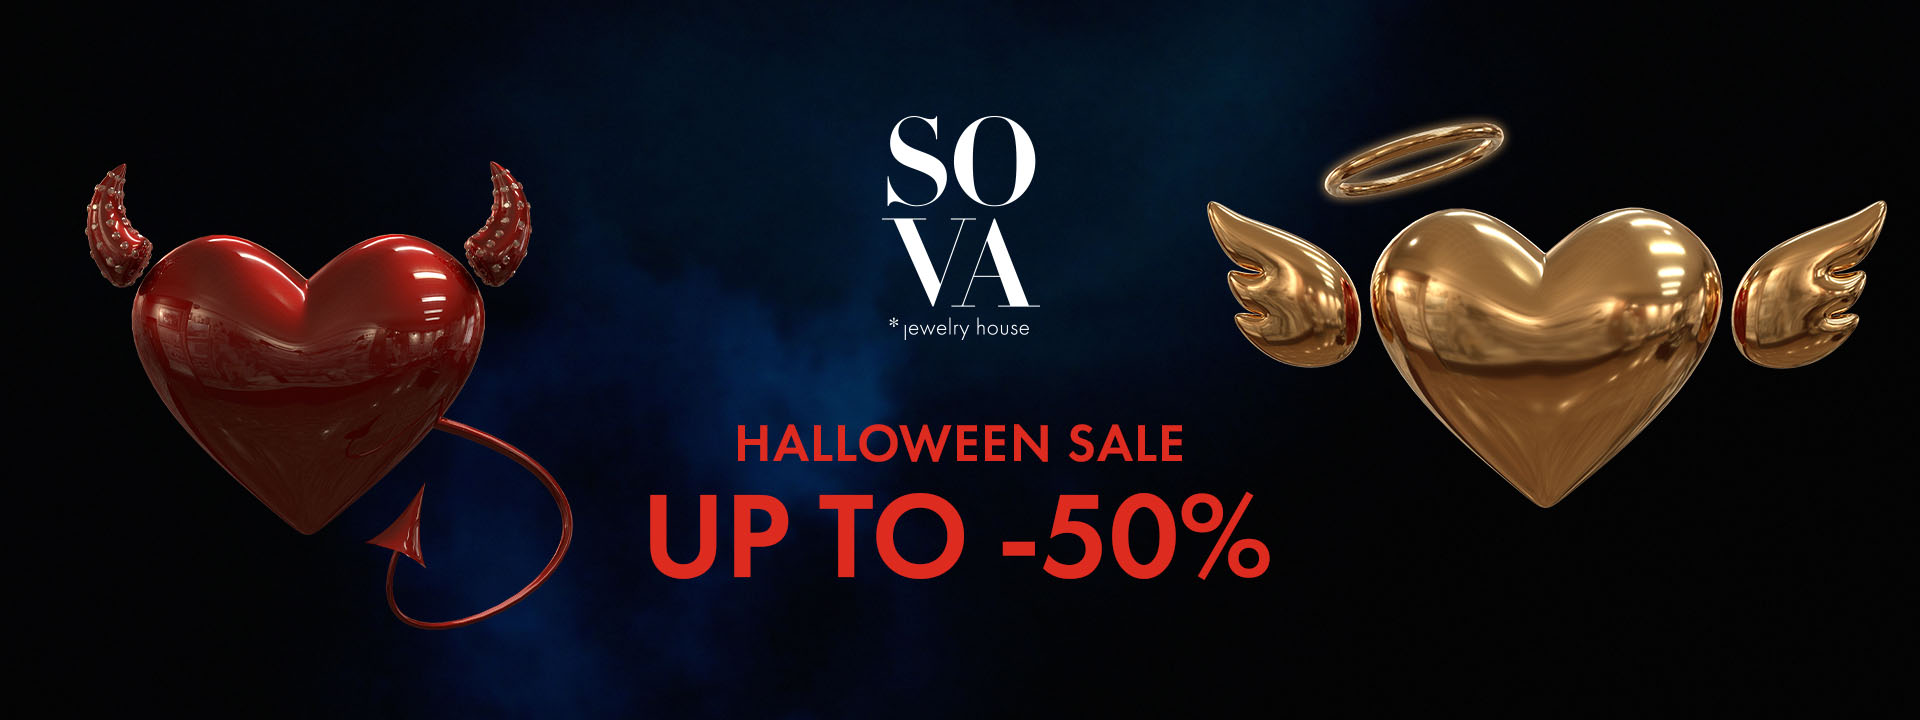 Halloween Sale in 
SOVA